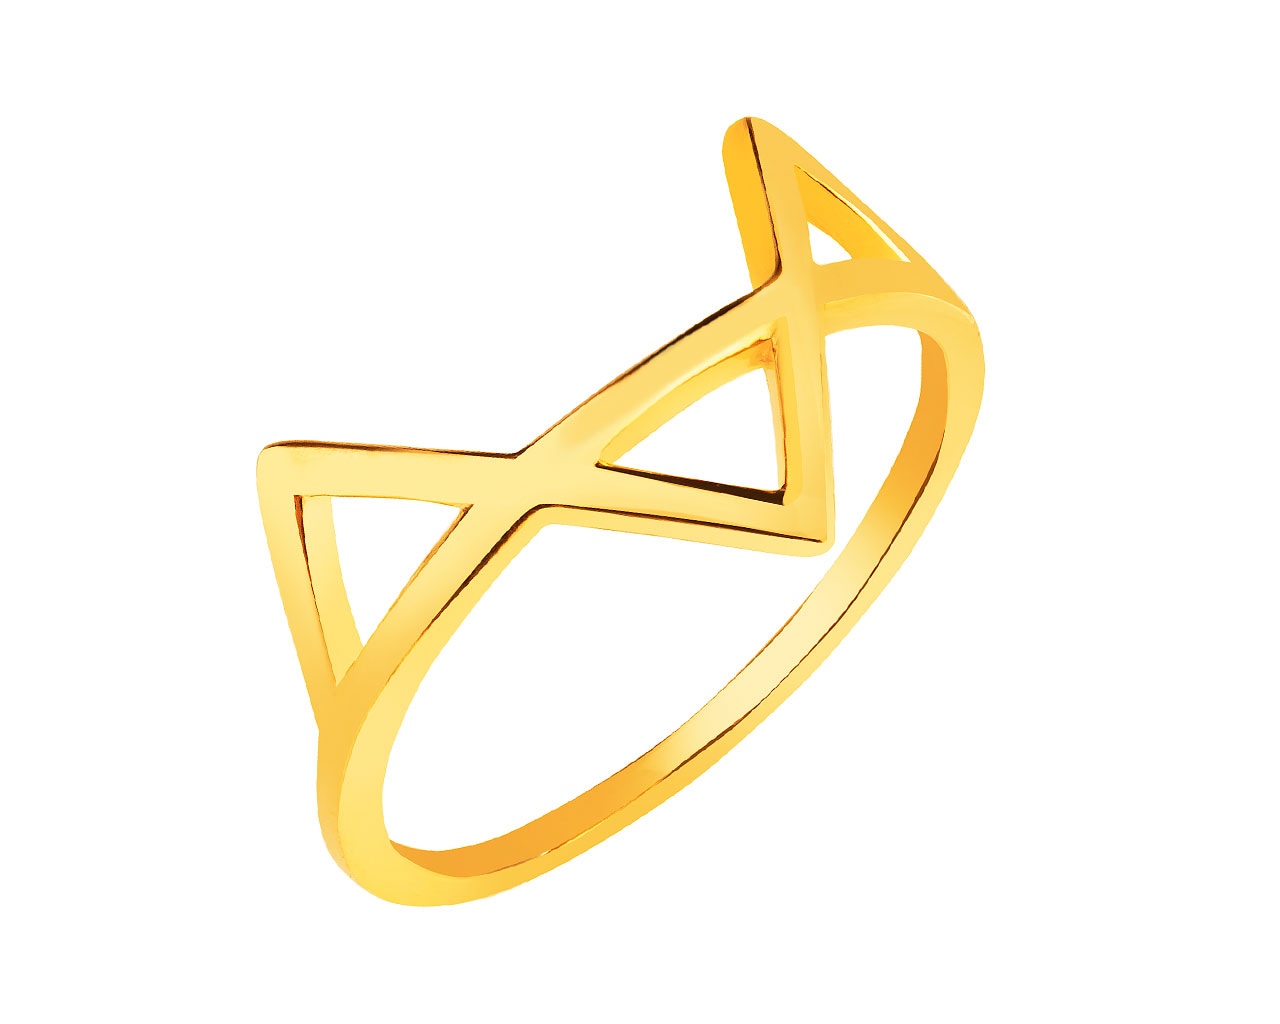 8ct Yellow Gold Ring